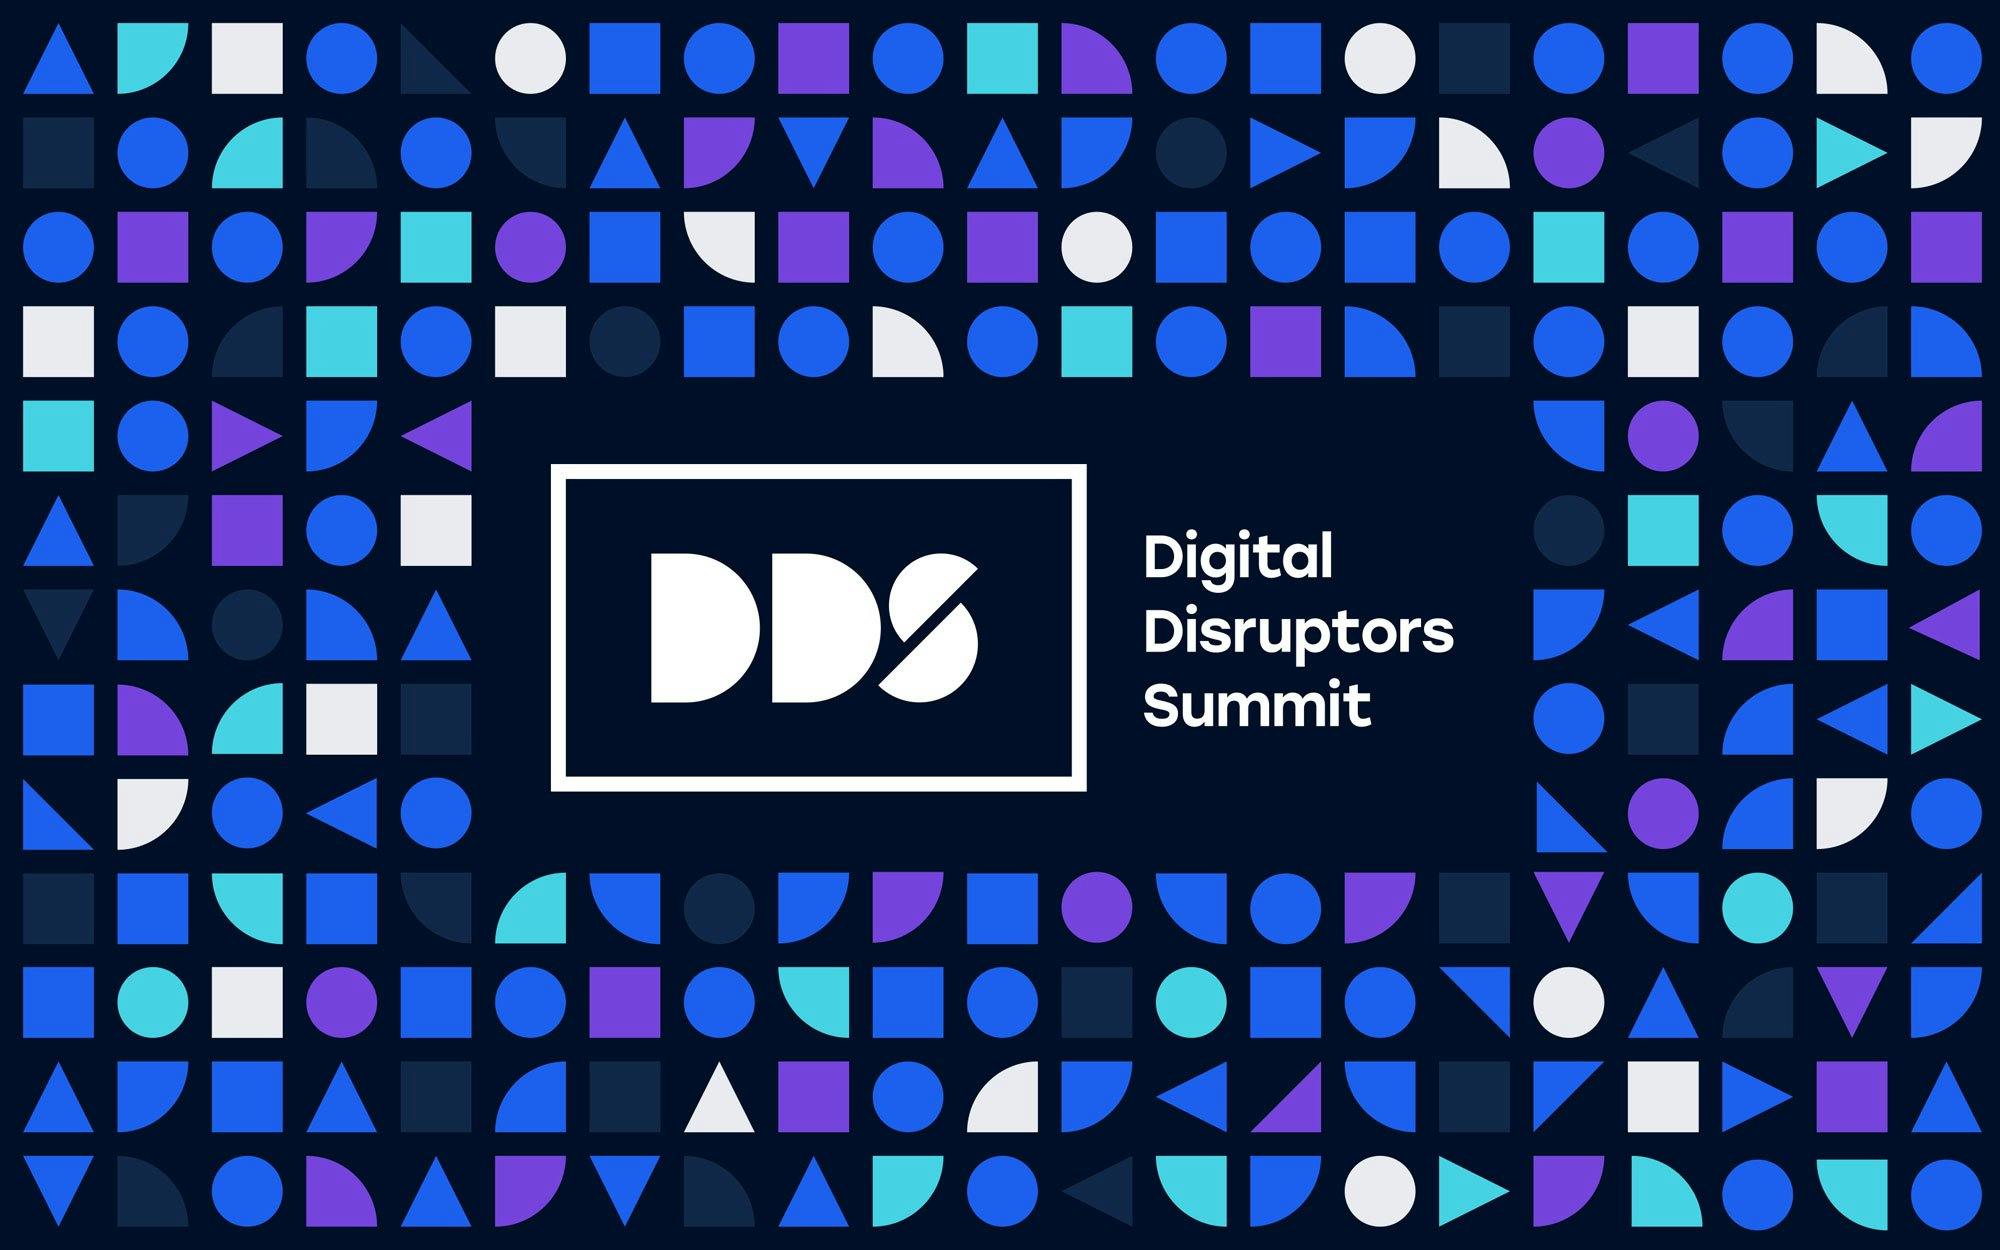 Digital Disruptors Summit from Amplitude